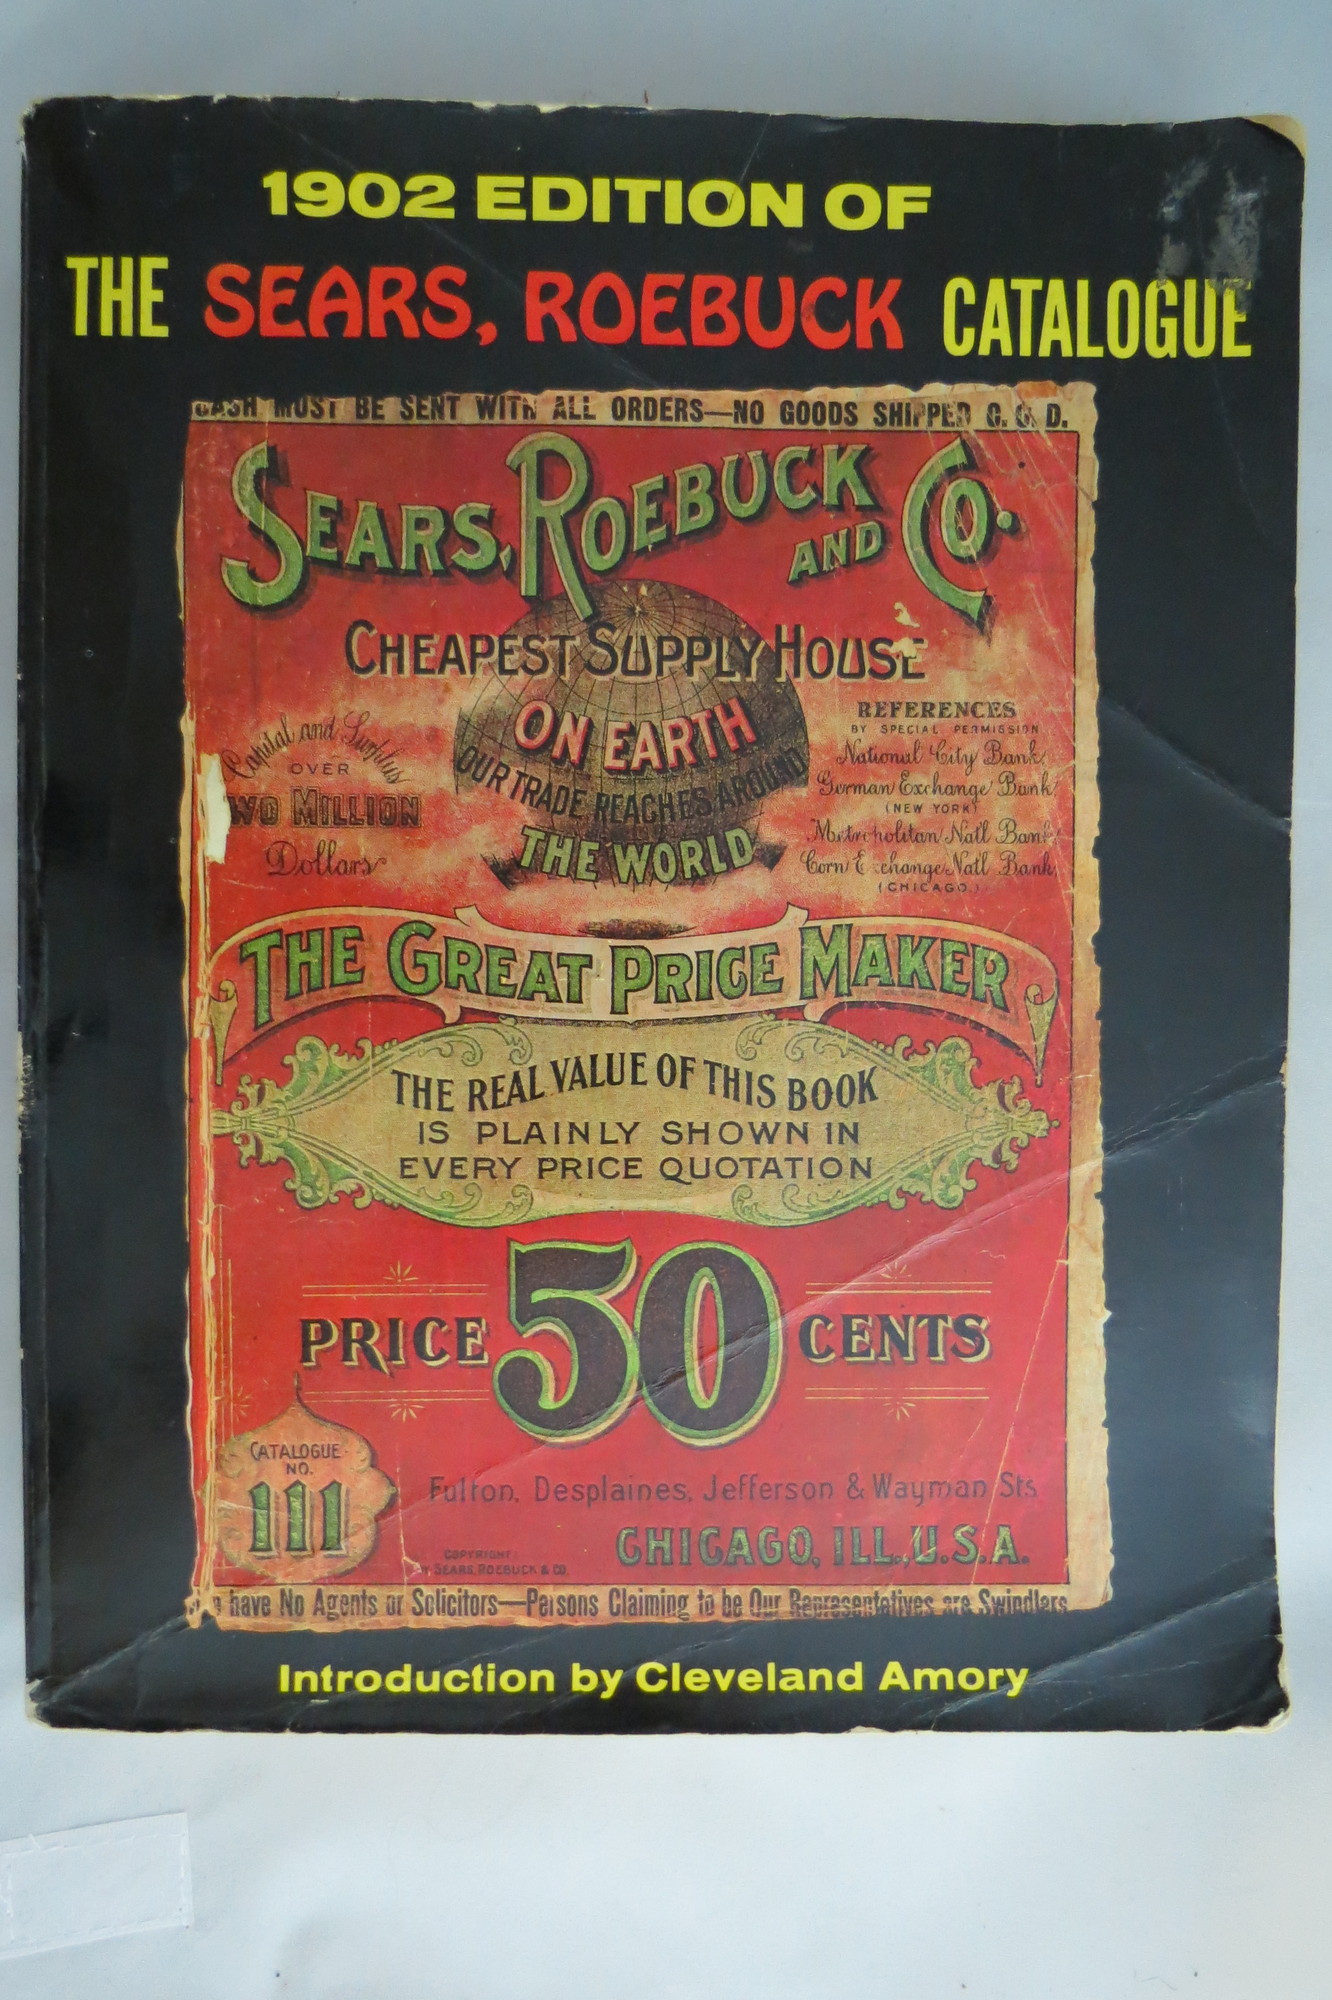 1927 Edition of the Sears, Roebuck Catalogue: Sears/Roebuck